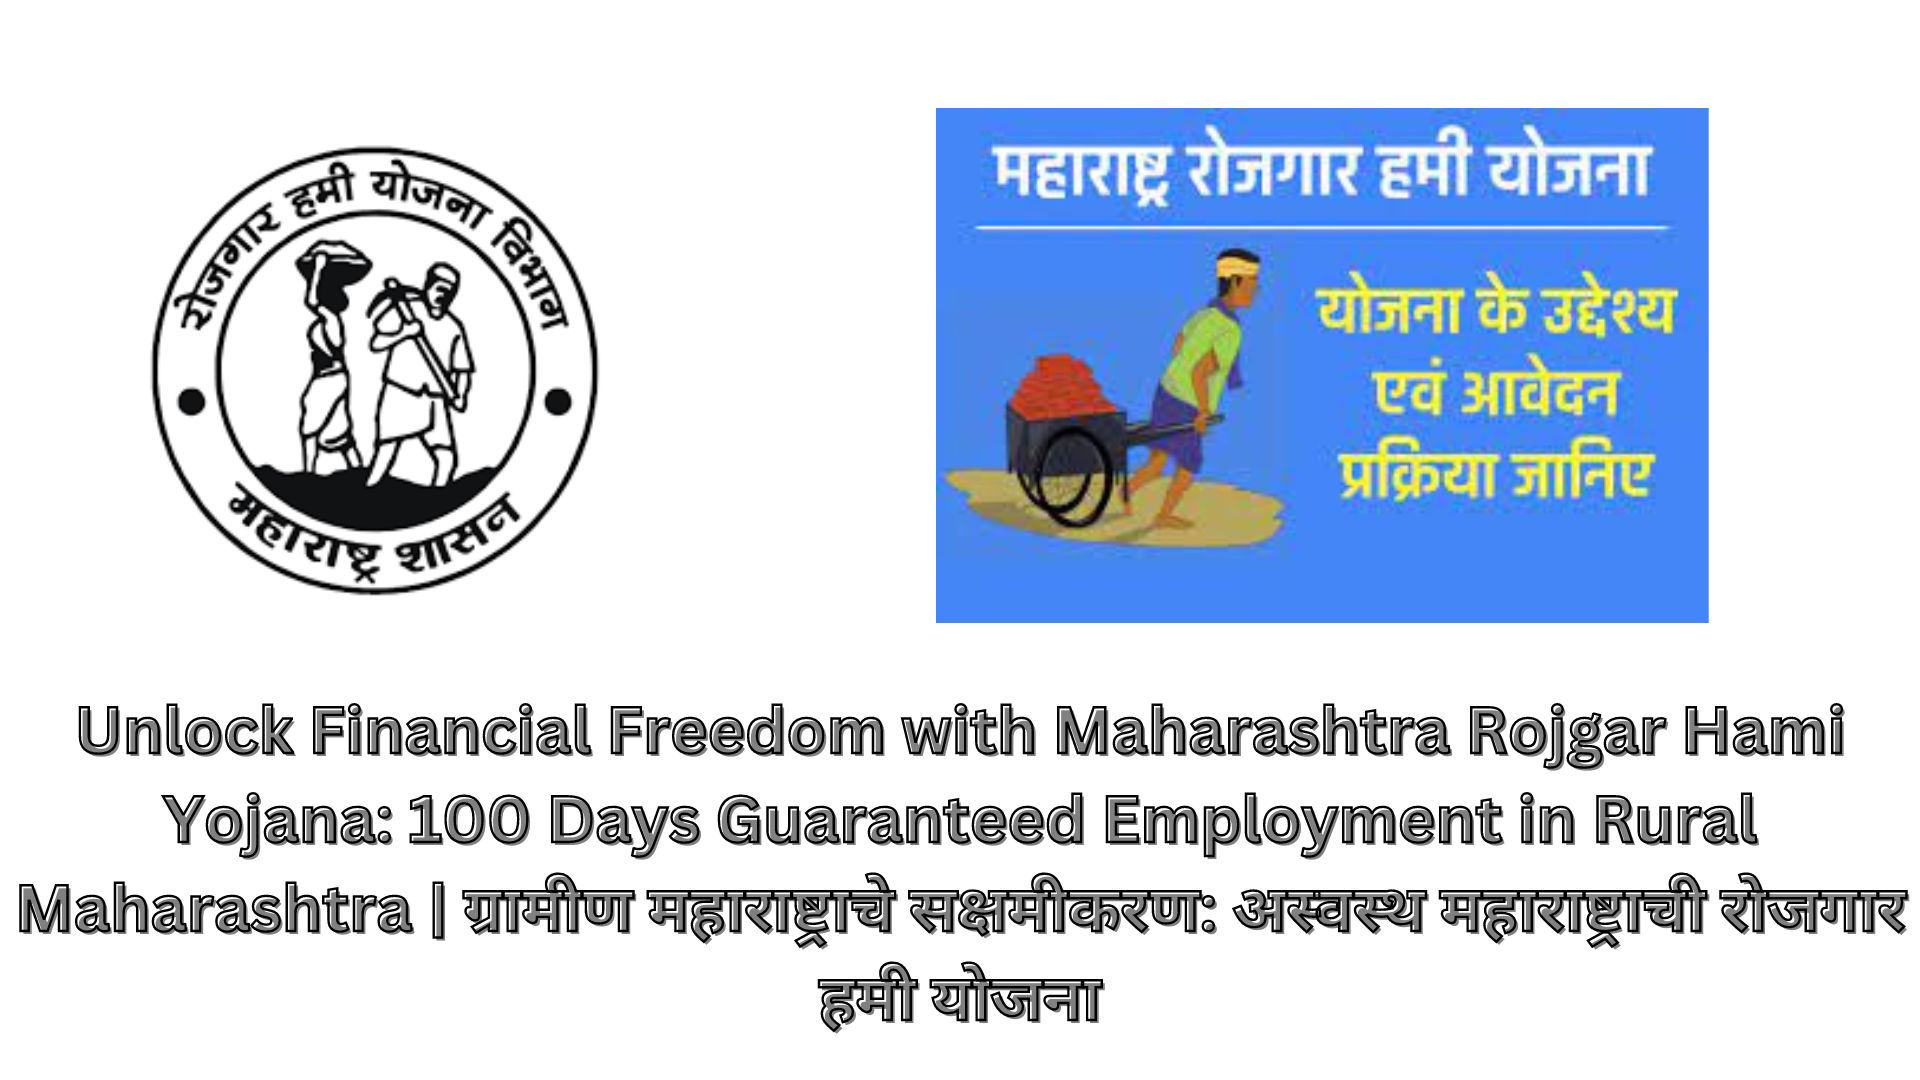 Unlock Financial Freedom with Maharashtra Rojgar Hami Yojana: 100 Days Guaranteed Employment in Rural Maharashtra | ग्रामीण महाराष्ट्राचे सक्षमीकरण: अस्वस्थ महाराष्ट्राची रोजगार हमी योजना